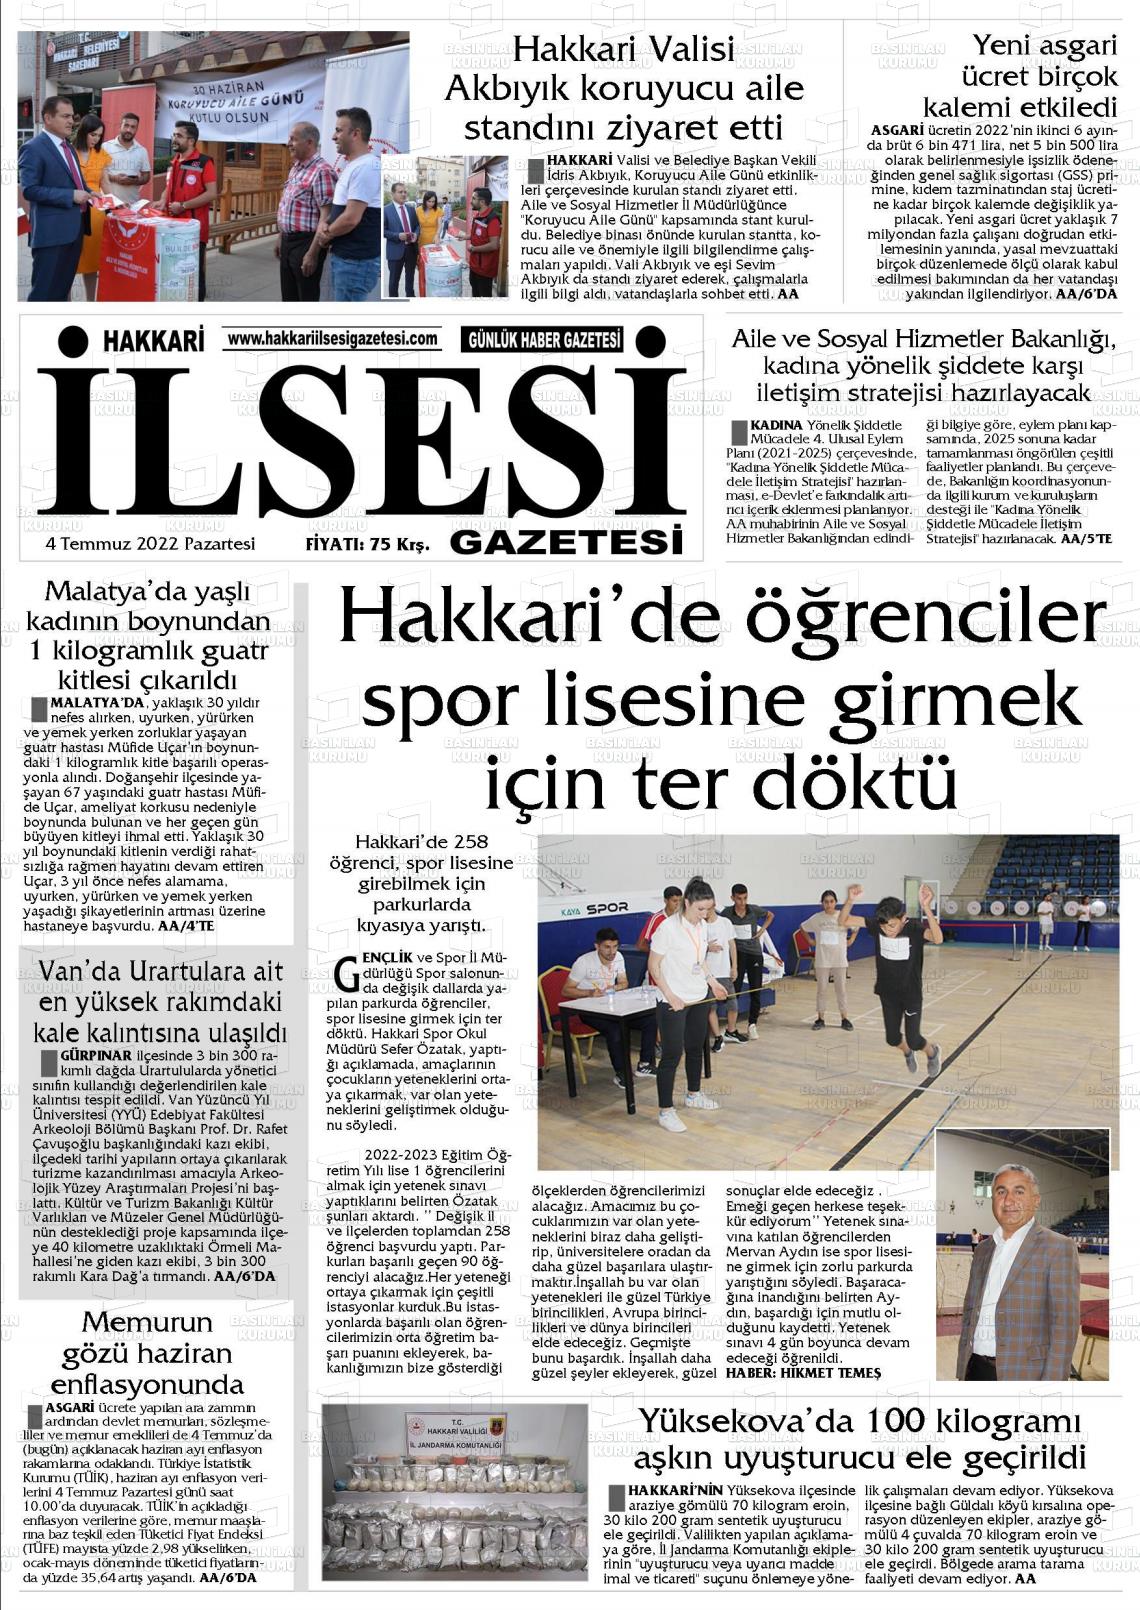 04 Temmuz 2022 Hakkari İl Sesi Gazete Manşeti